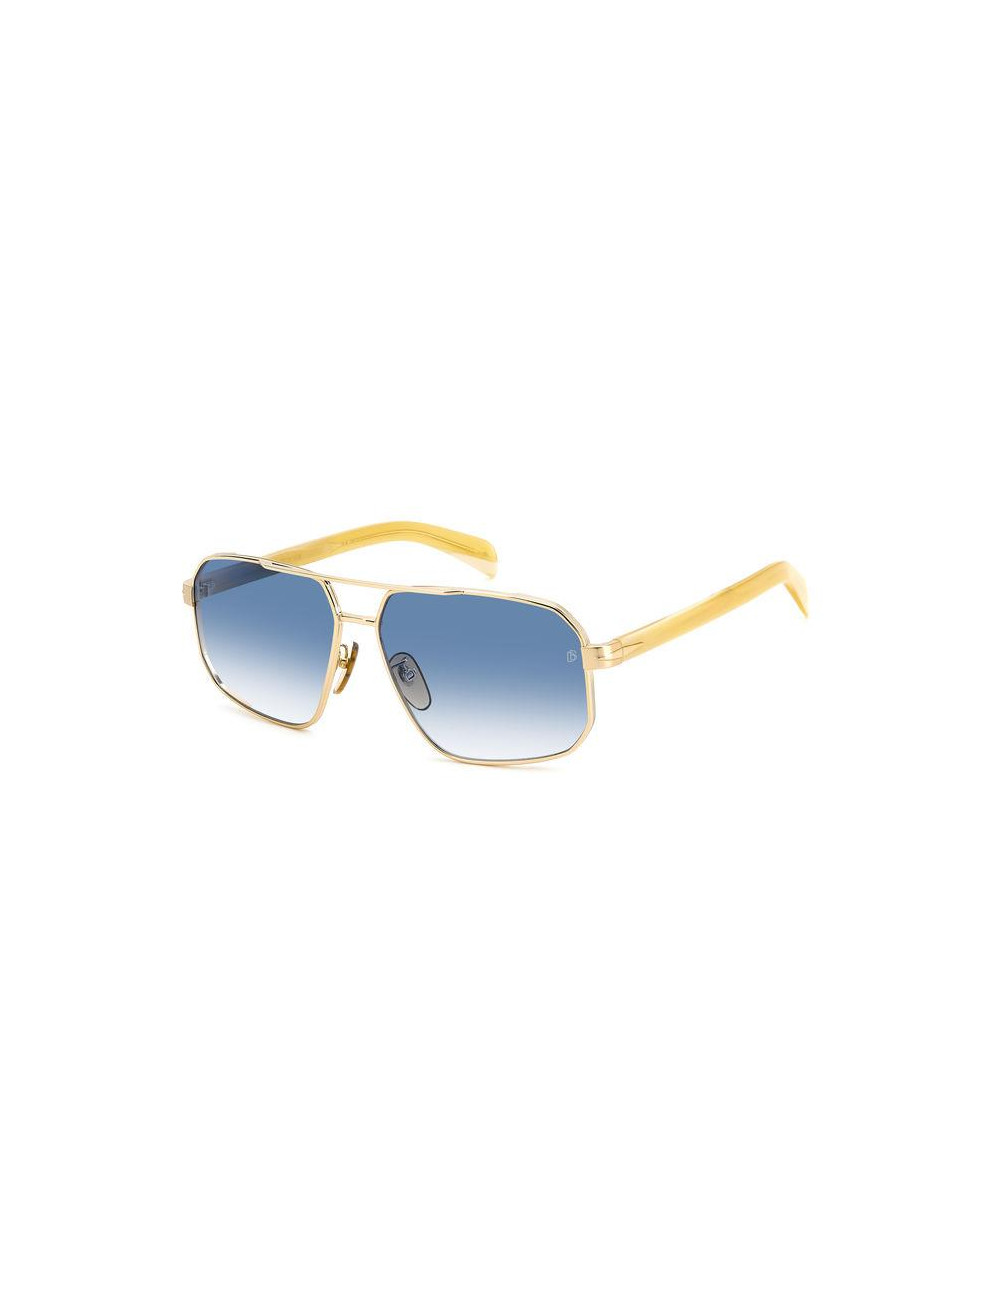 David Beckham DB 7102/S sunglasses